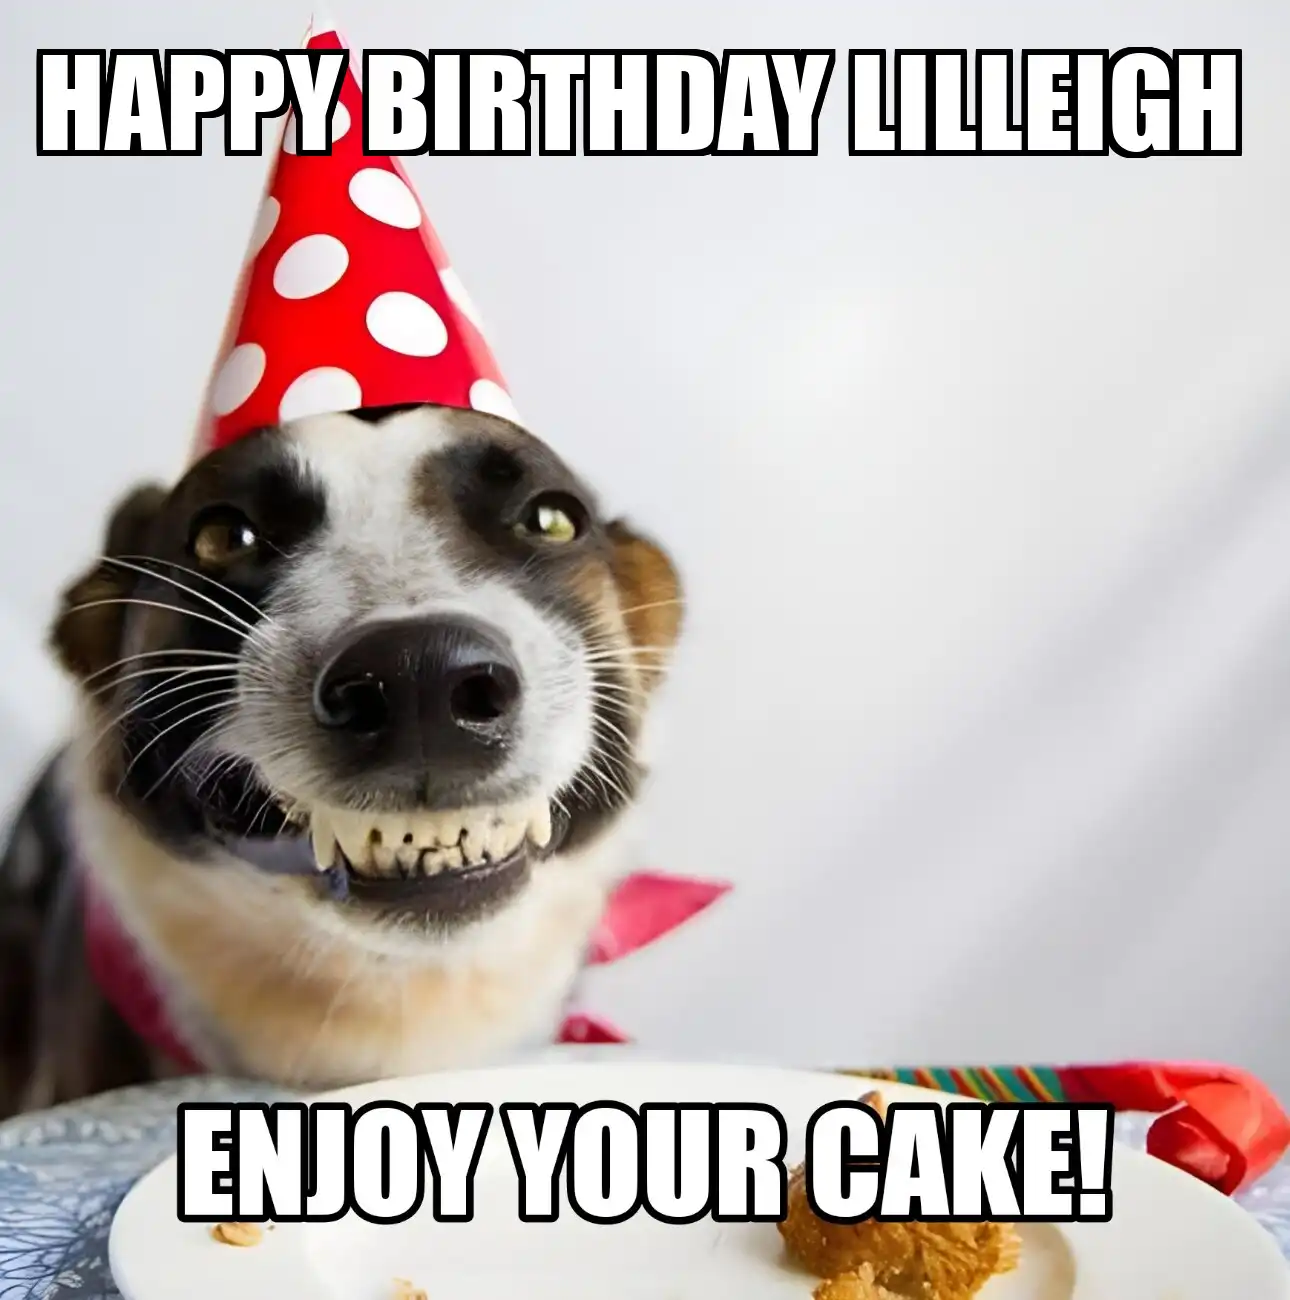 Happy Birthday Lilleigh Enjoy Your Cake Dog Meme